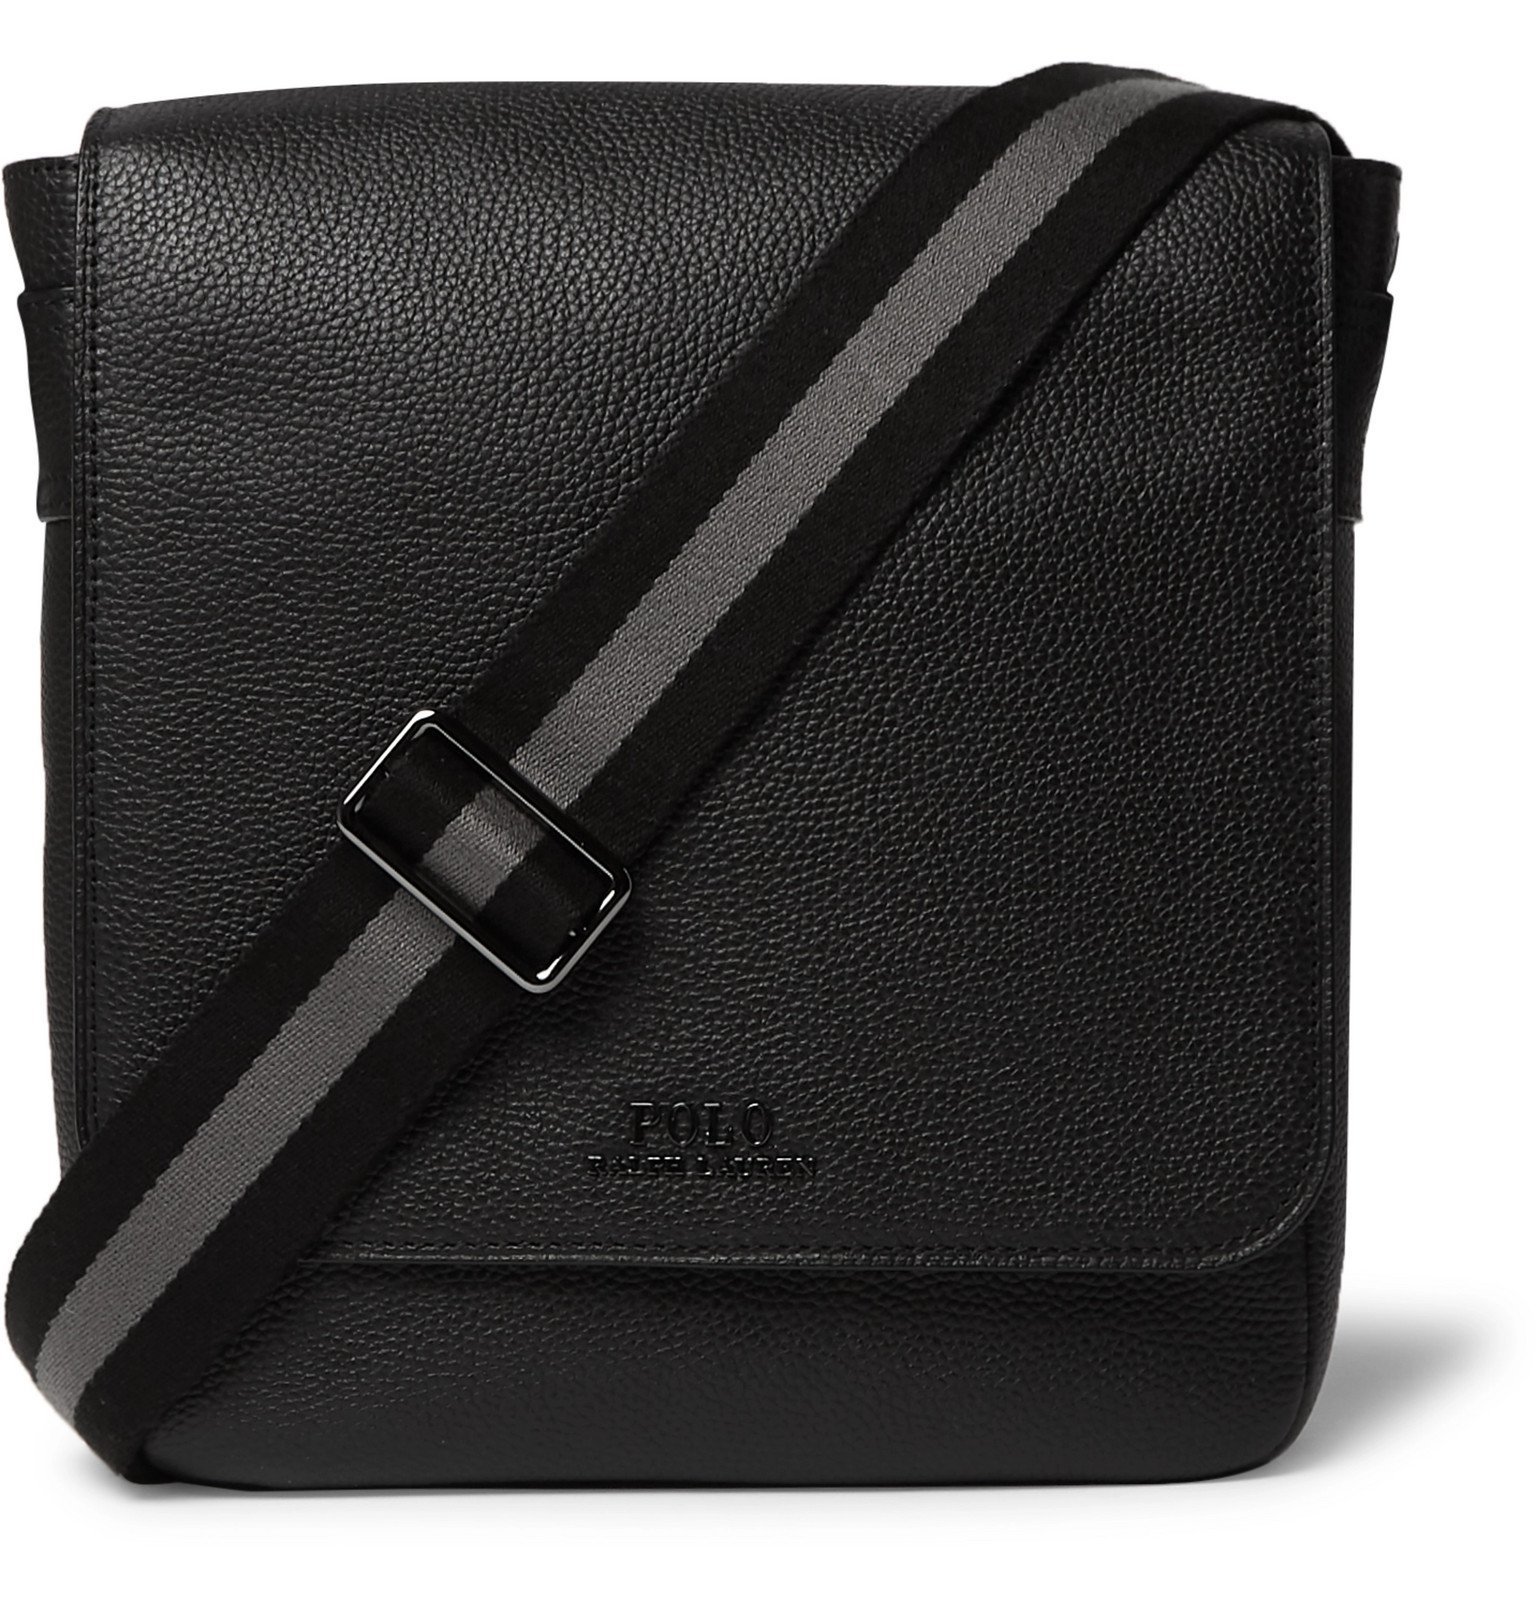 Polo Ralph Lauren - Pebble-Grain Leather Messenger Bag - Black Polo Ralph  Lauren